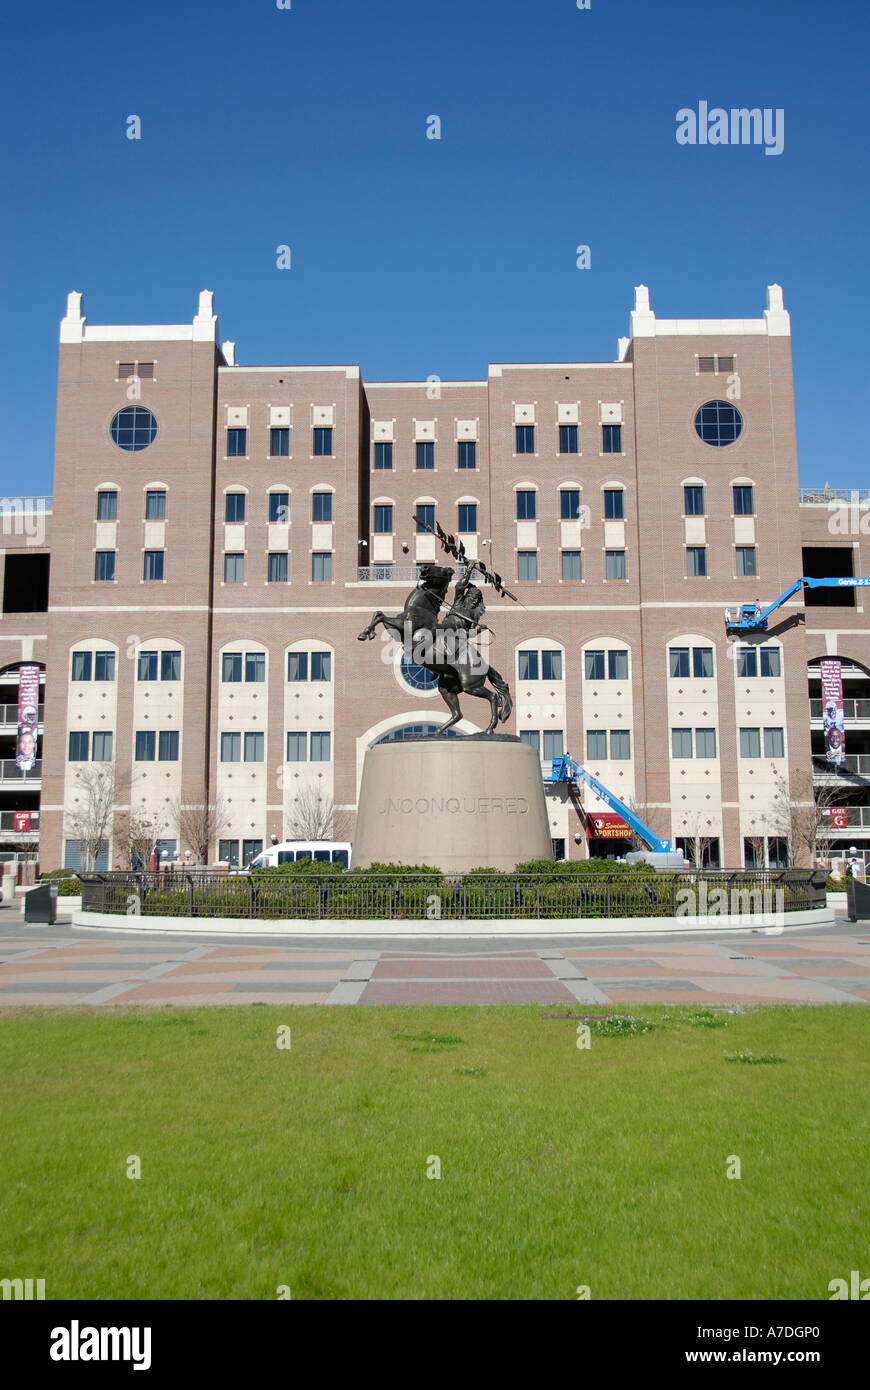 Doak S Campbell Football Stadium and Visitor Center on the Florida State University Campus Tallahassee Florida FL Seminoles Stock Photo